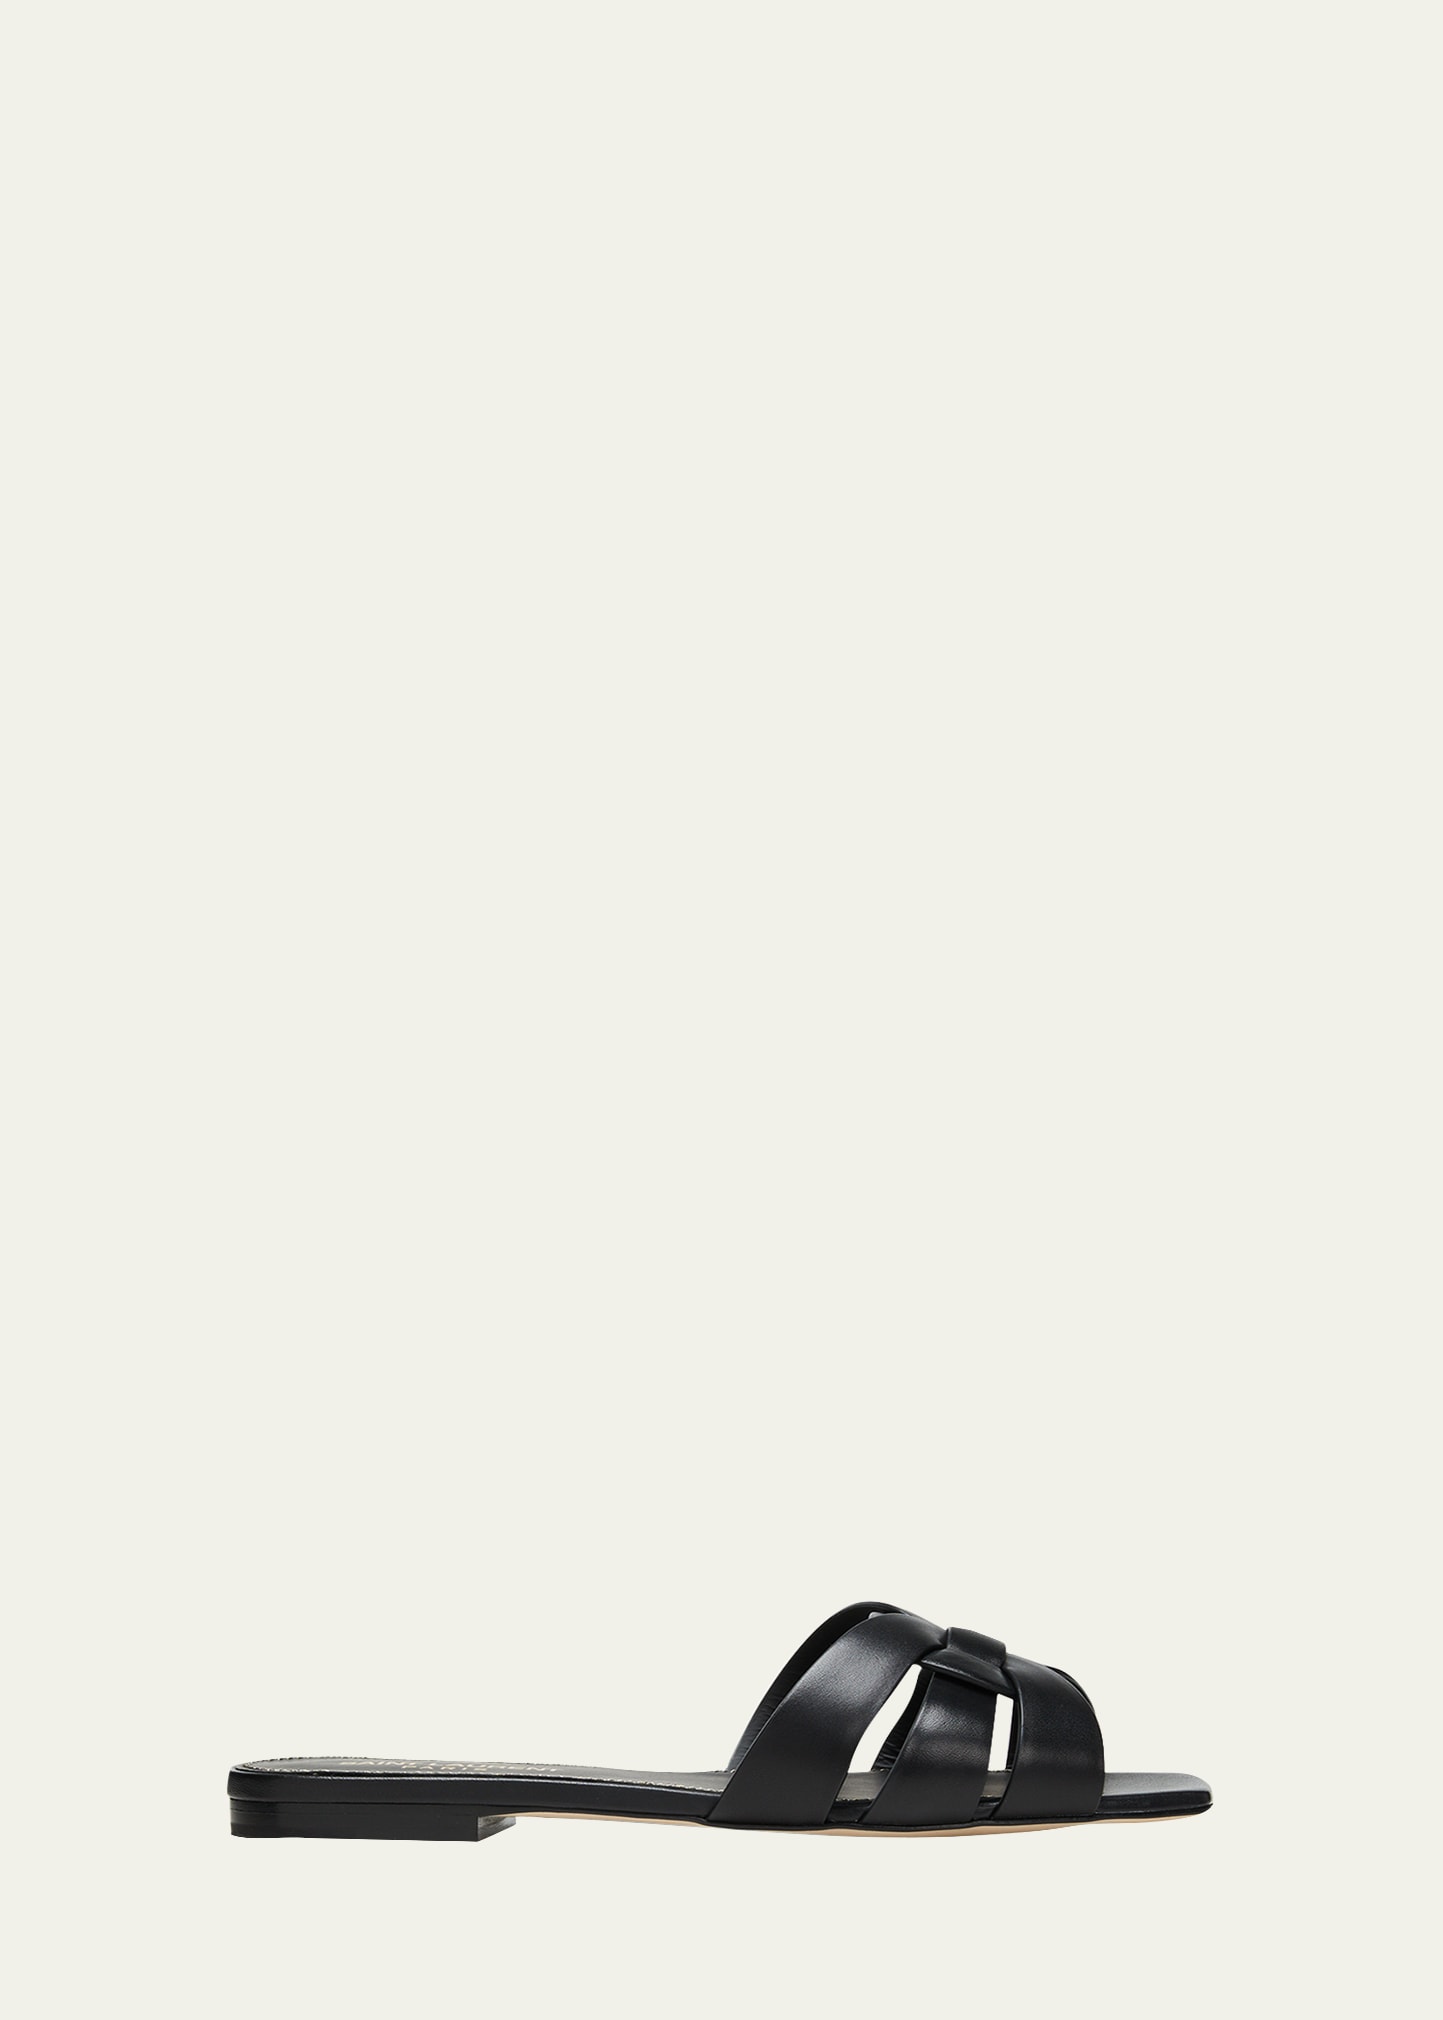 Saint Laurent Woven Leather Sandal Slide